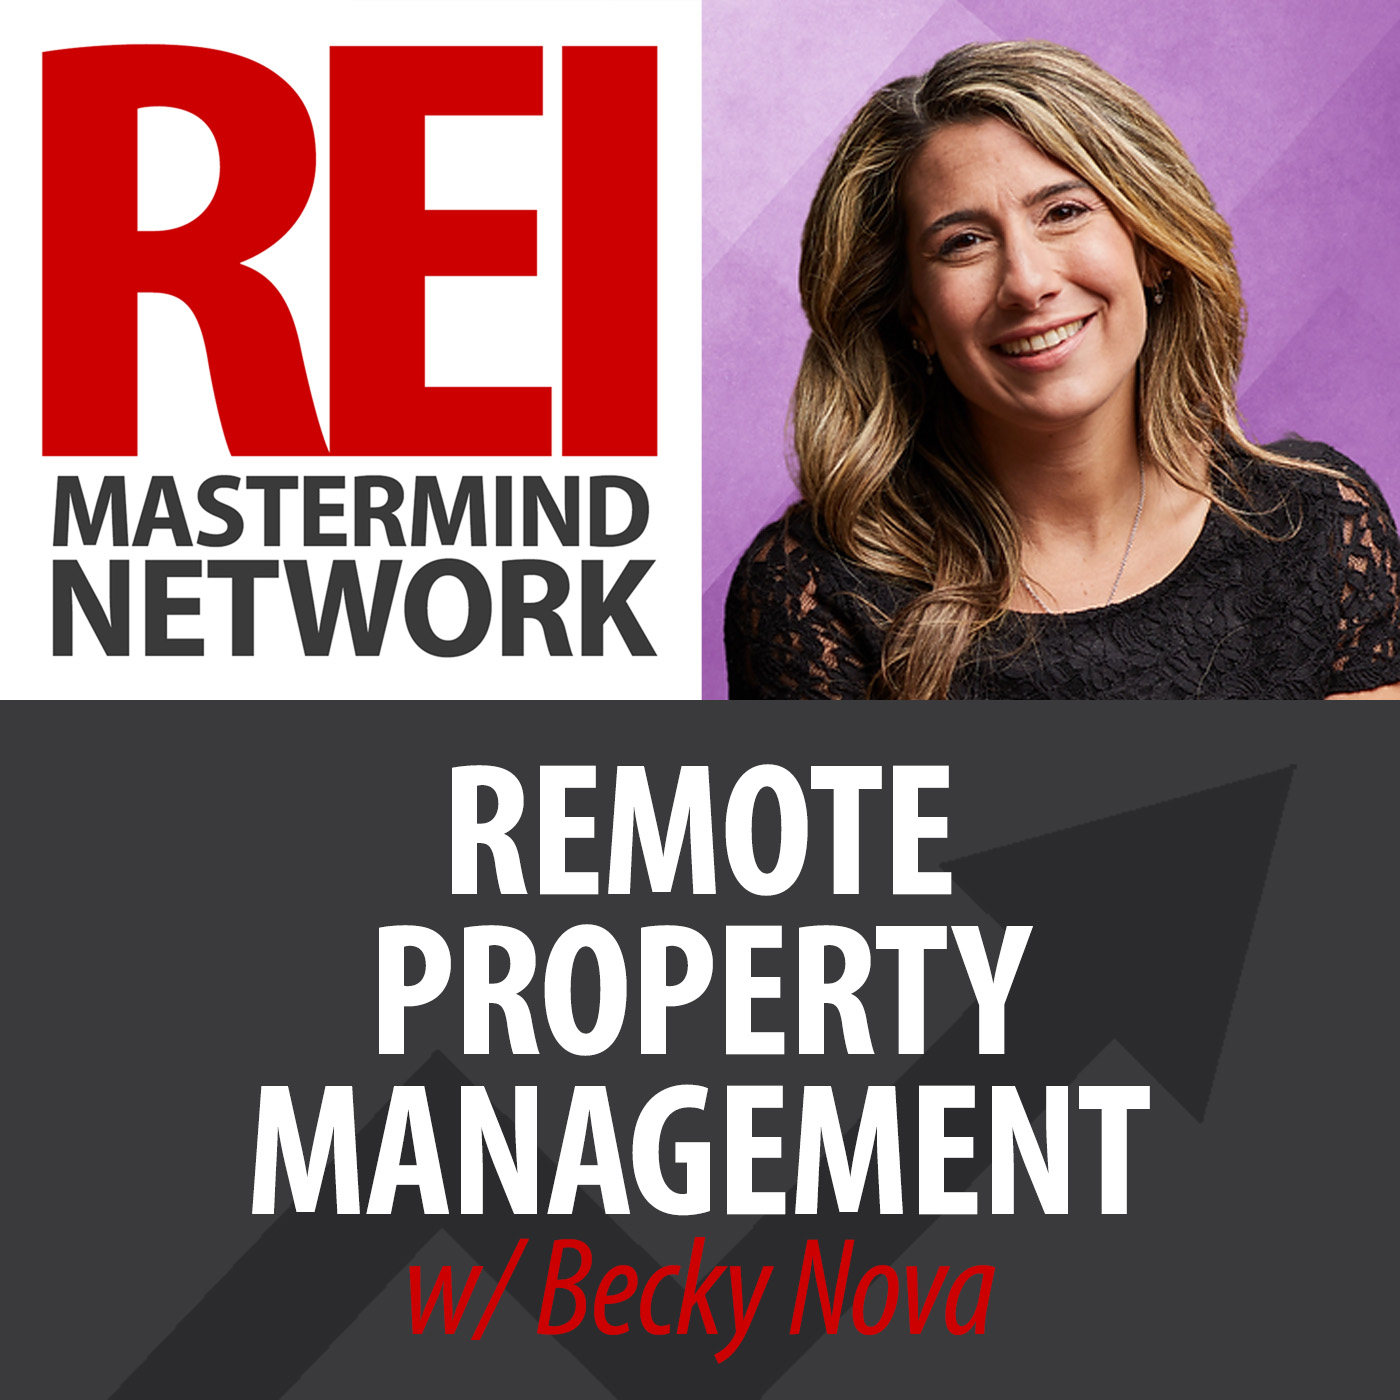 Remote Property Management with Becky Nova